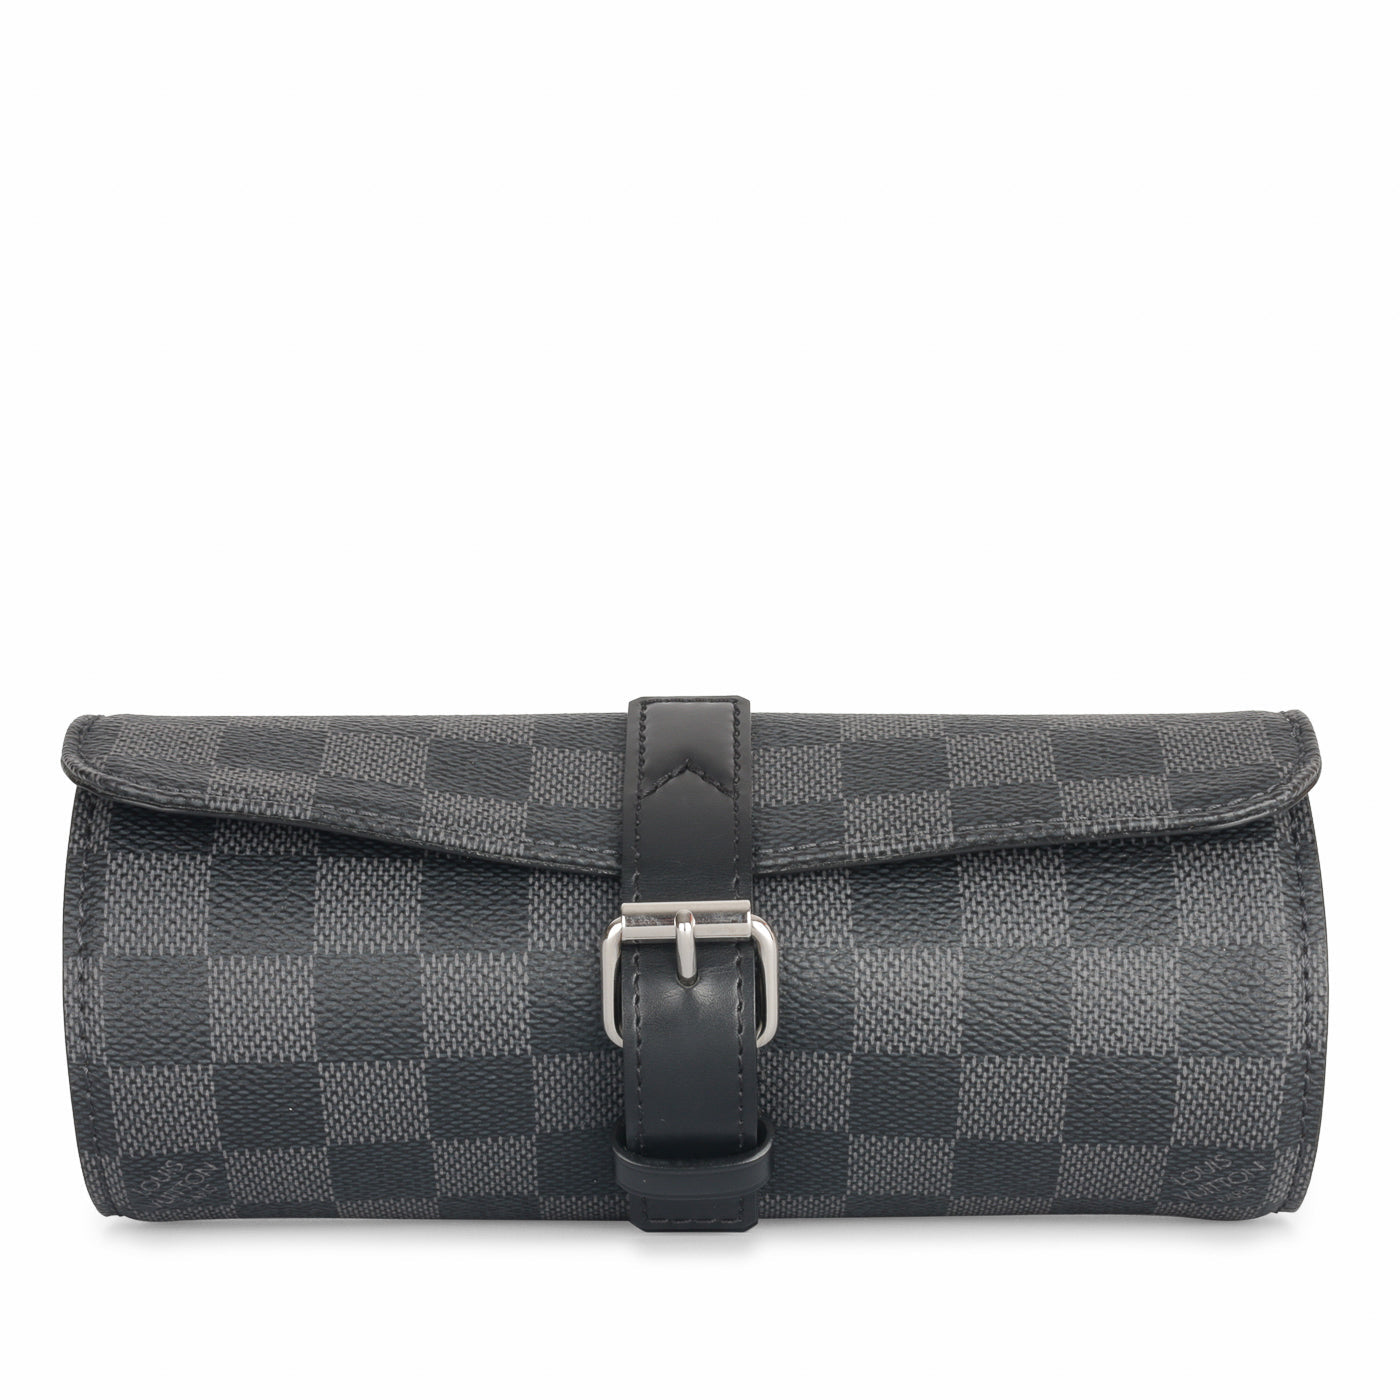 Shop Louis Vuitton DAMIER GRAPHITE 2021 SS 3 Watch Case (N41137